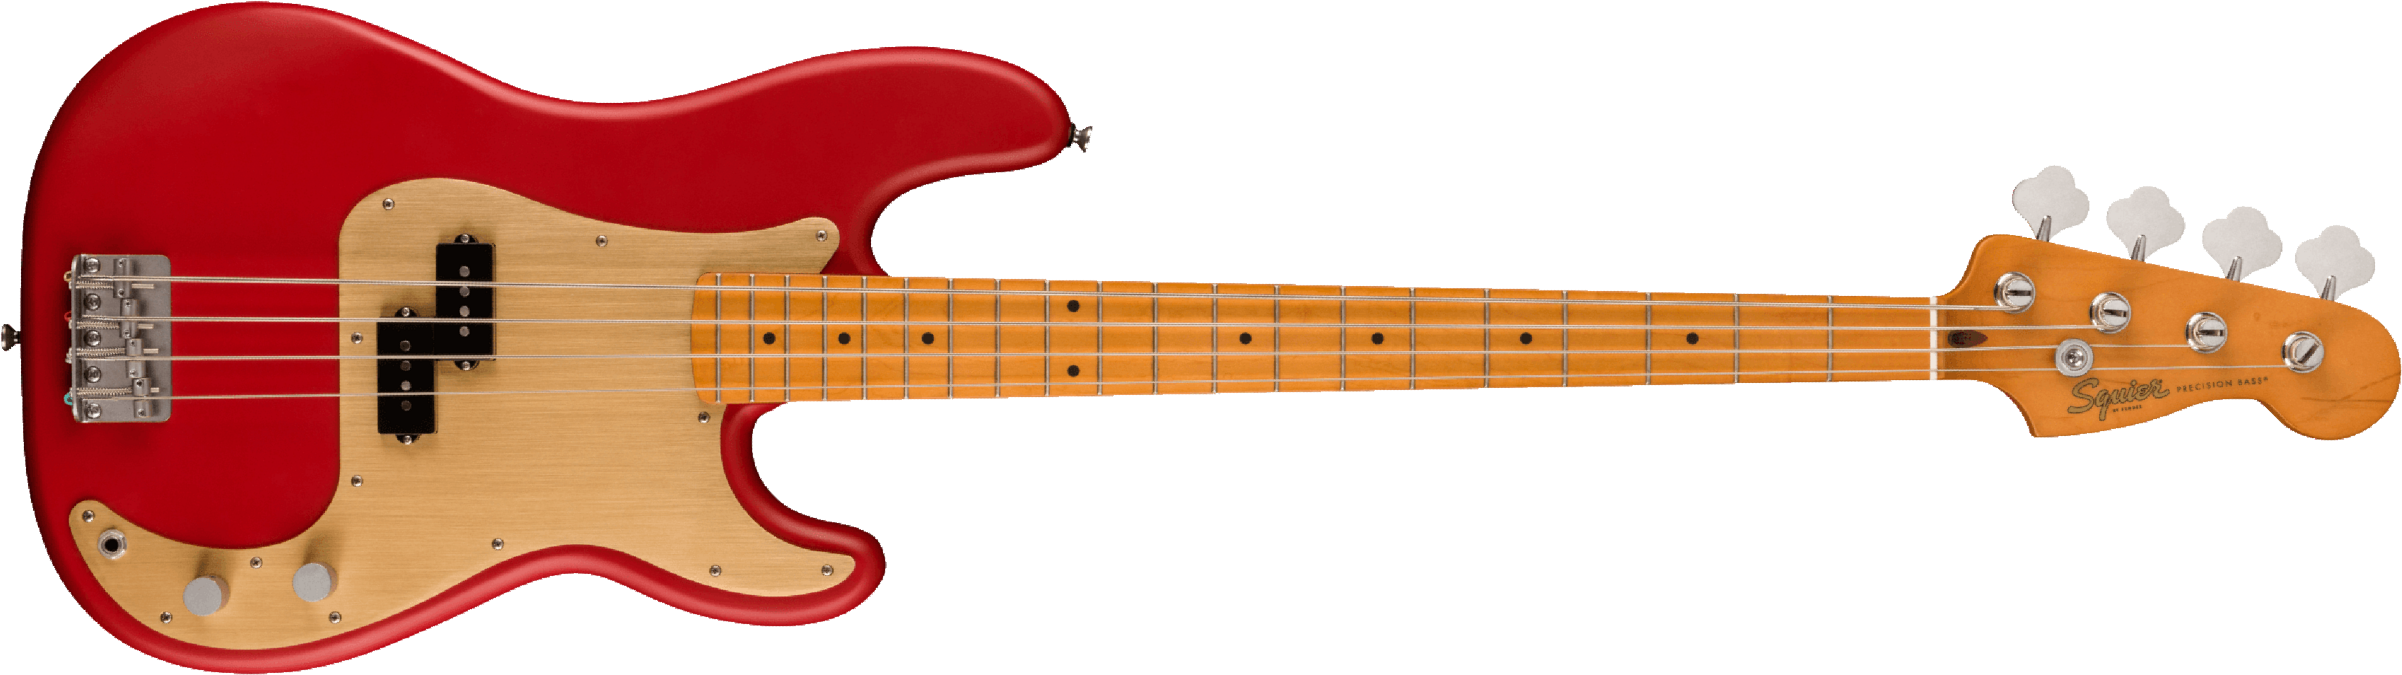 Squier Precision Bass 40th Anniversary Gold Edition Mn - Satin Dakota Red - Solid body elektrische bas - Main picture